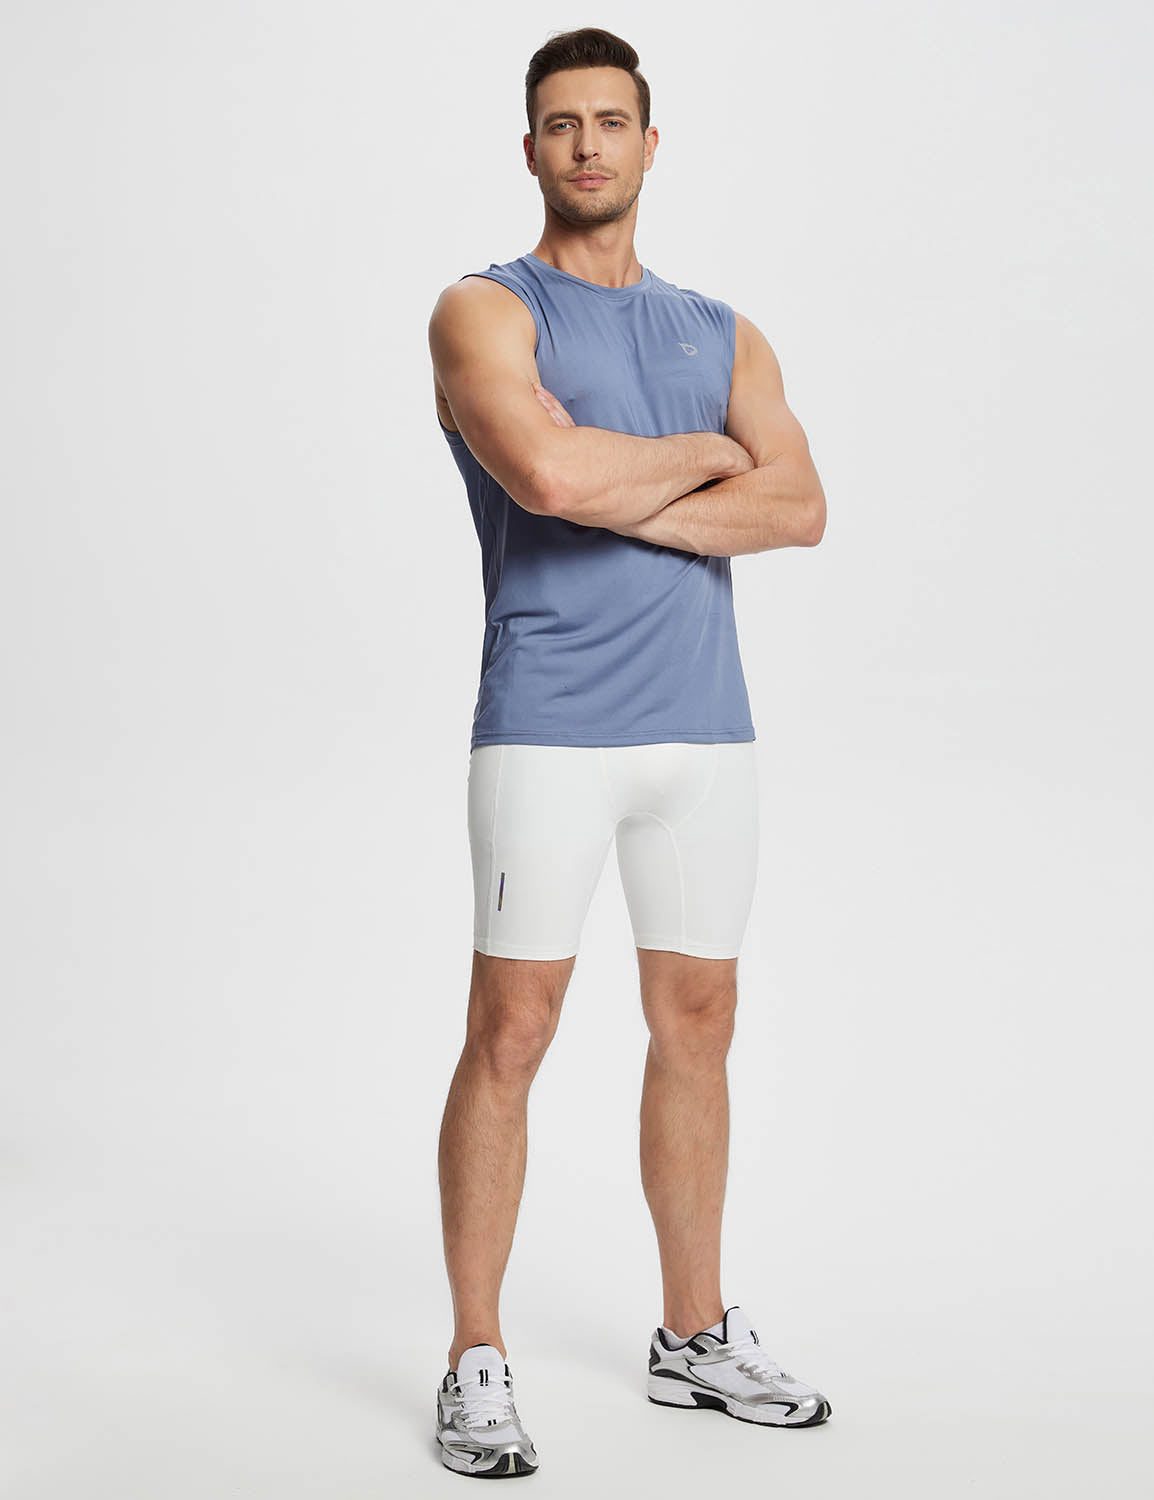 Baleaf Men's Lycra 2-in-1 Compresion Shorts (Website Exclusive) dbd060 Lucent White Full